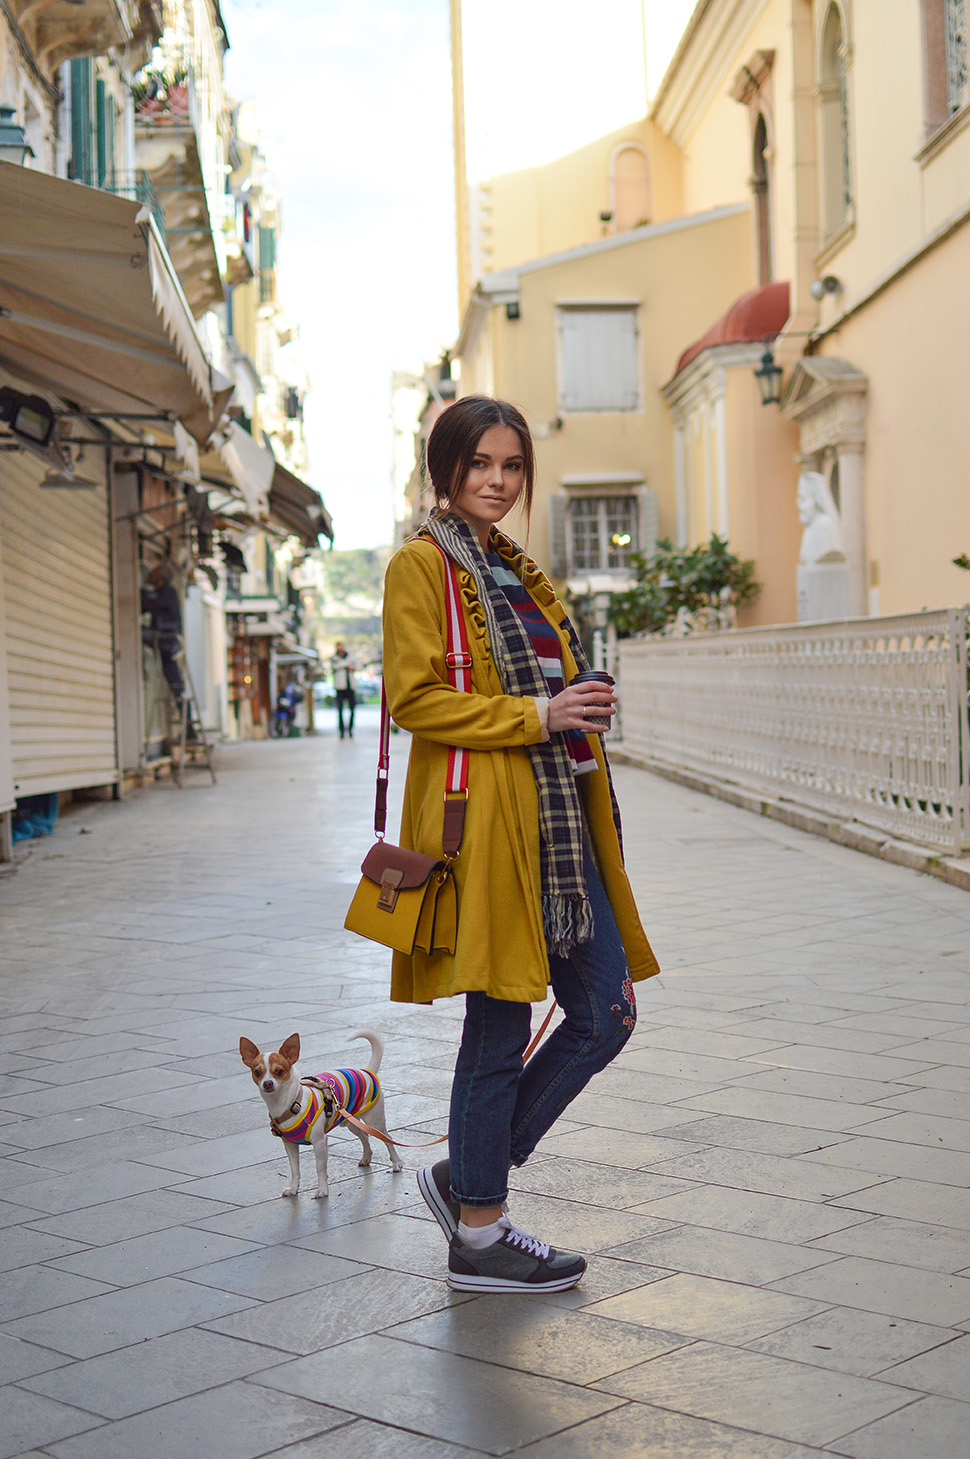 50 Shades of Corfu Town by Tamara Bellis